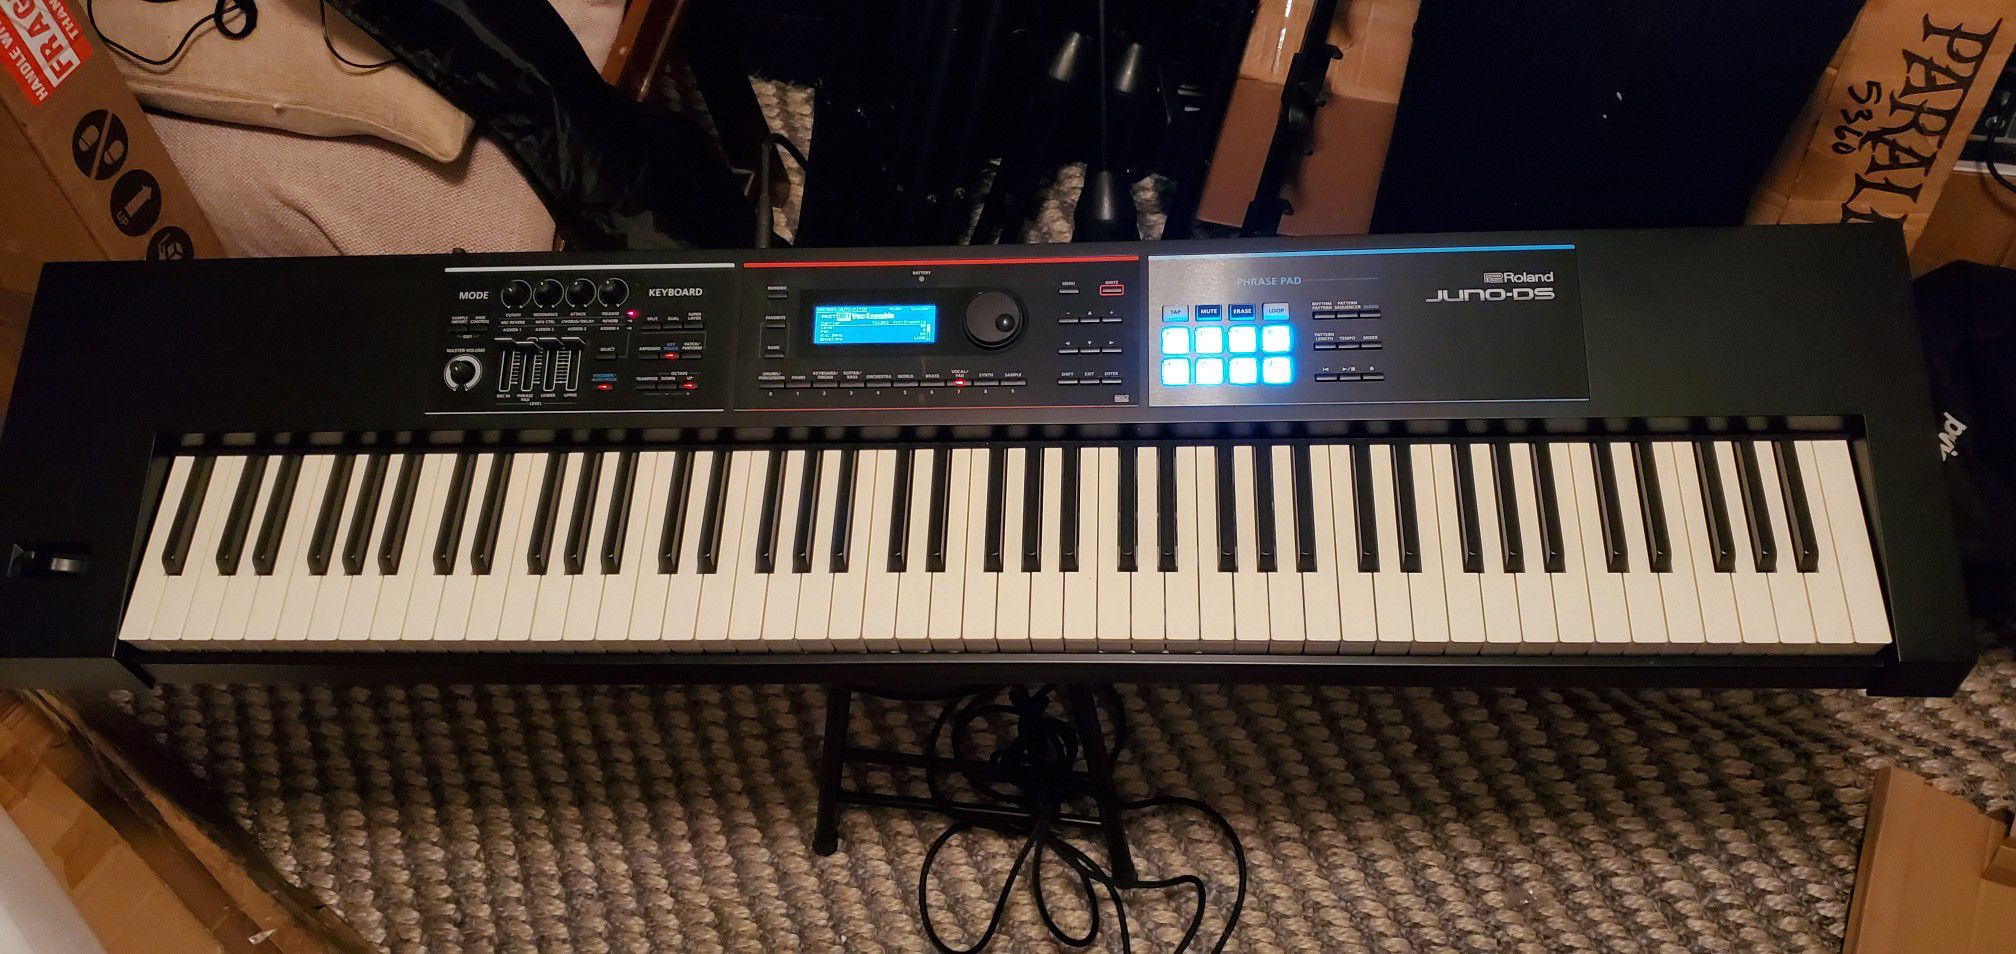 Roland Juno ds 88 Key Synthesizer